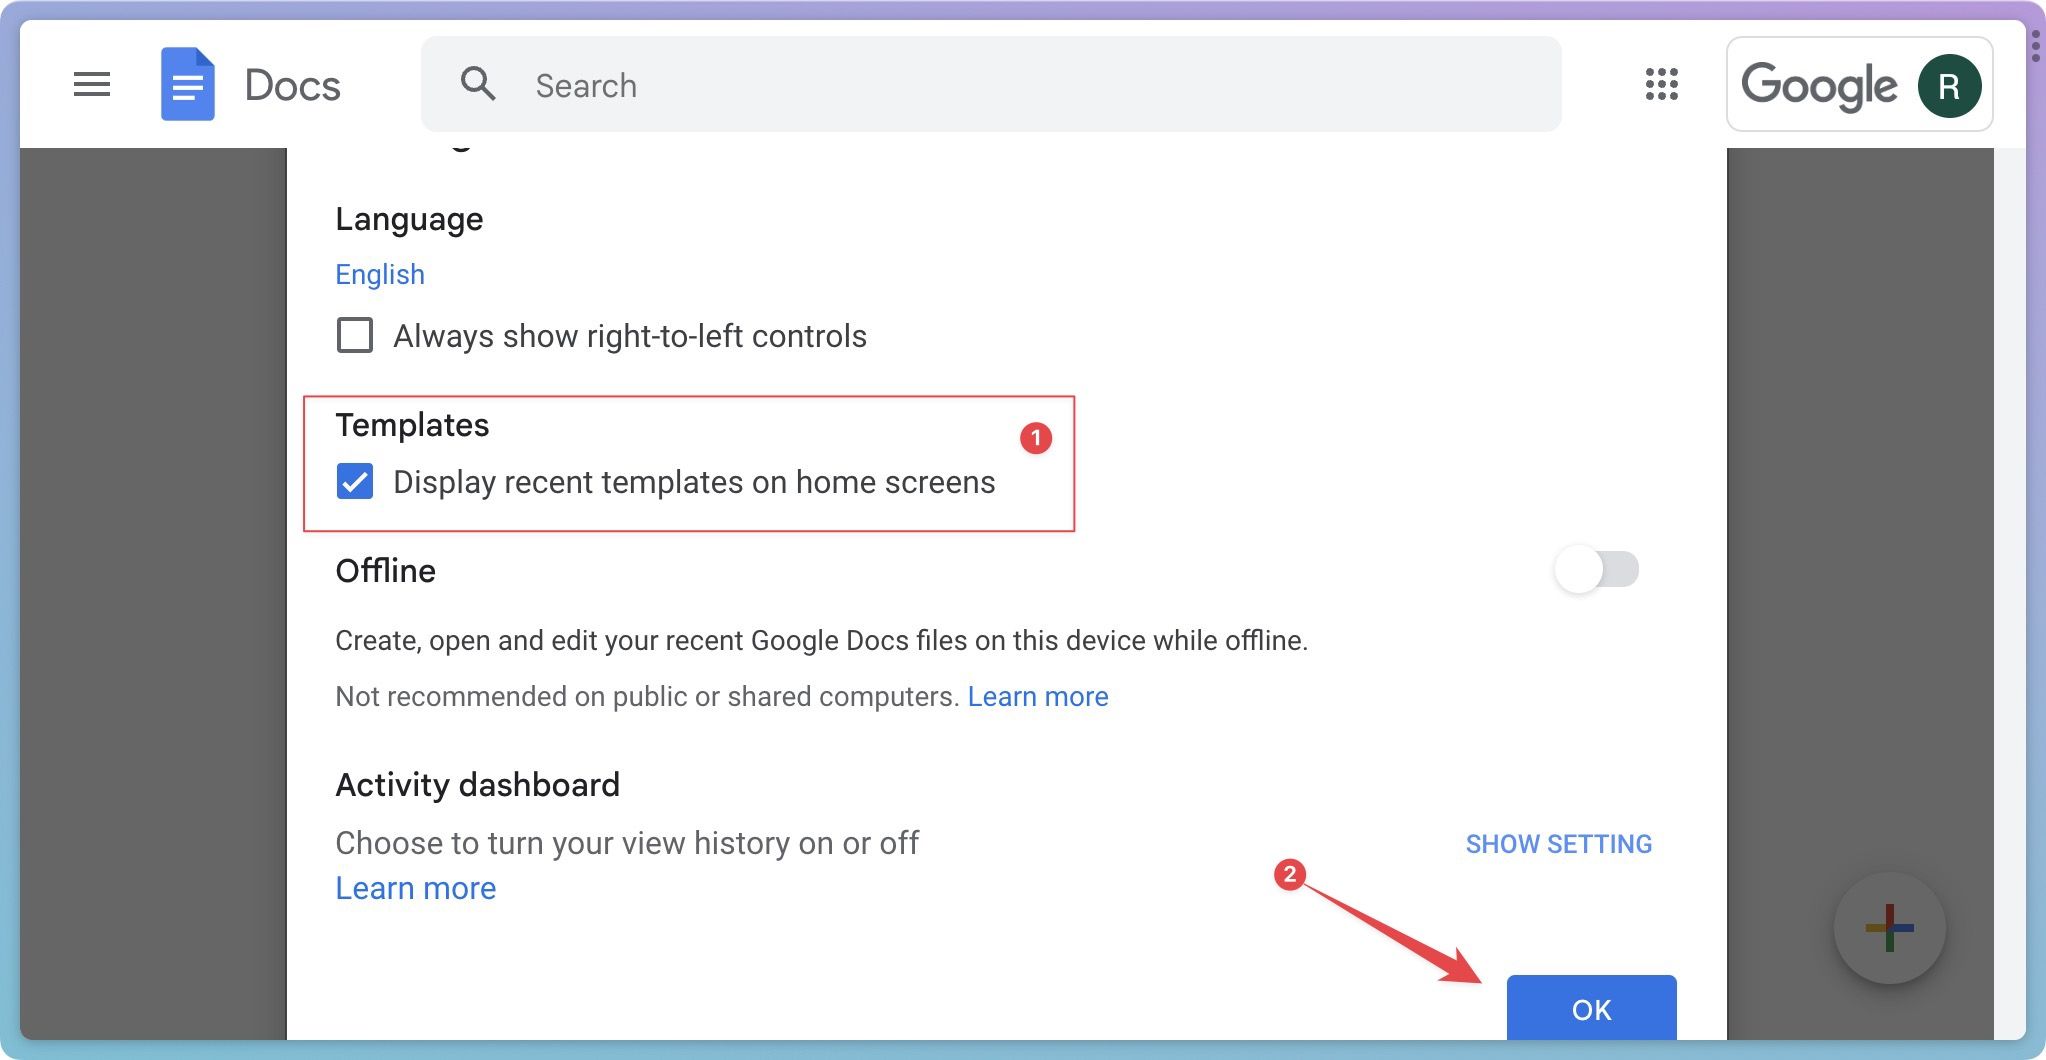 Google Docs Settings menu options showing Templates